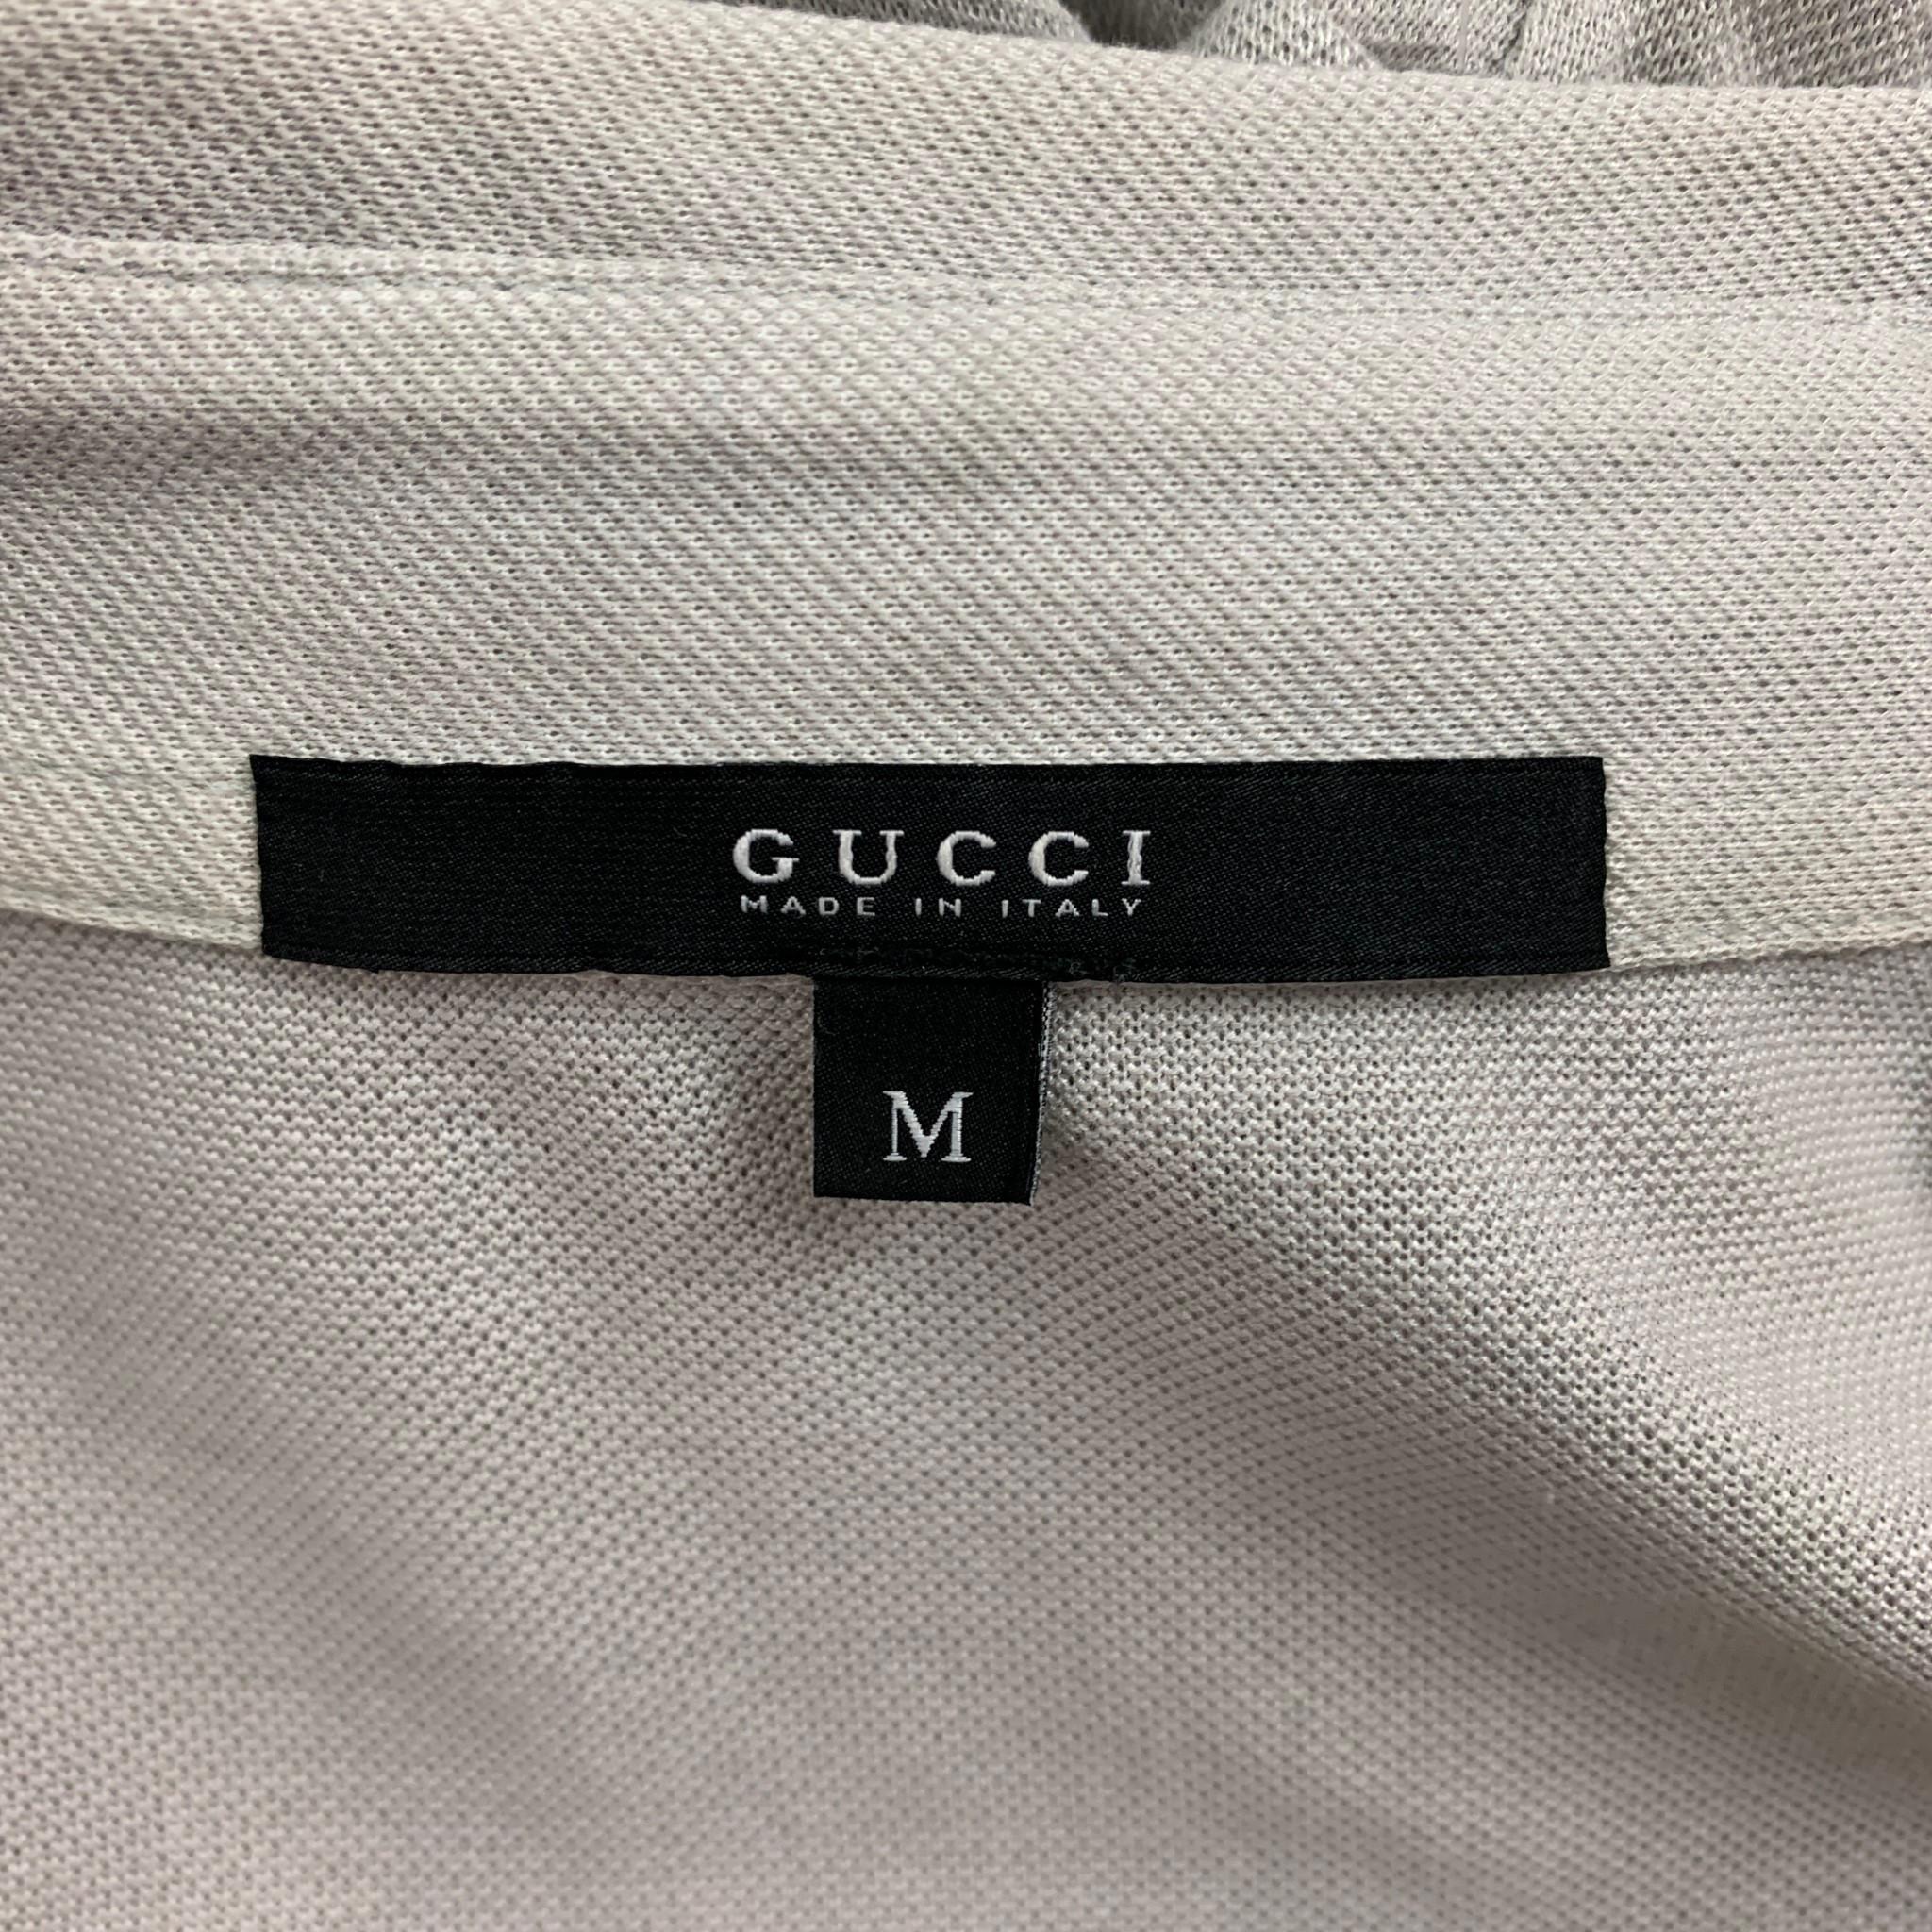 GUCCI Size M Light Grey Textured Cotton Button Down Short Sleeve Shirt 1